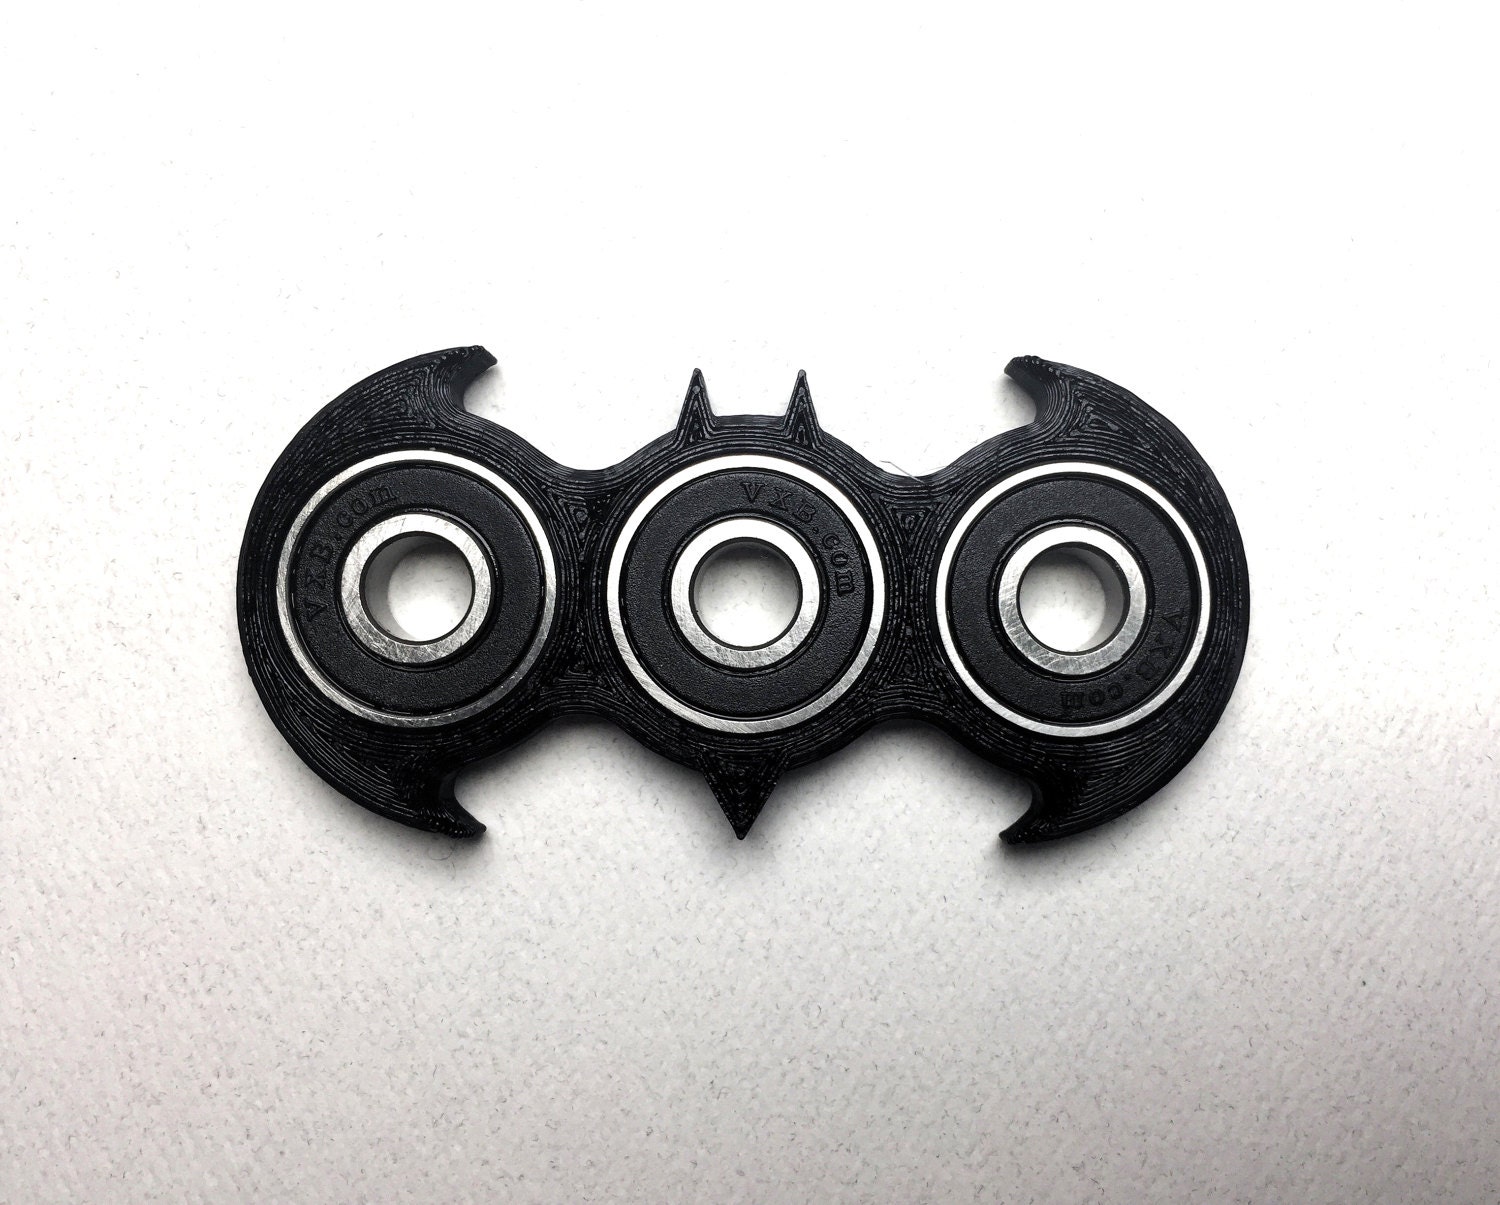 Batman Fidget Spinner 3D printed toy by mollycampbelldesign